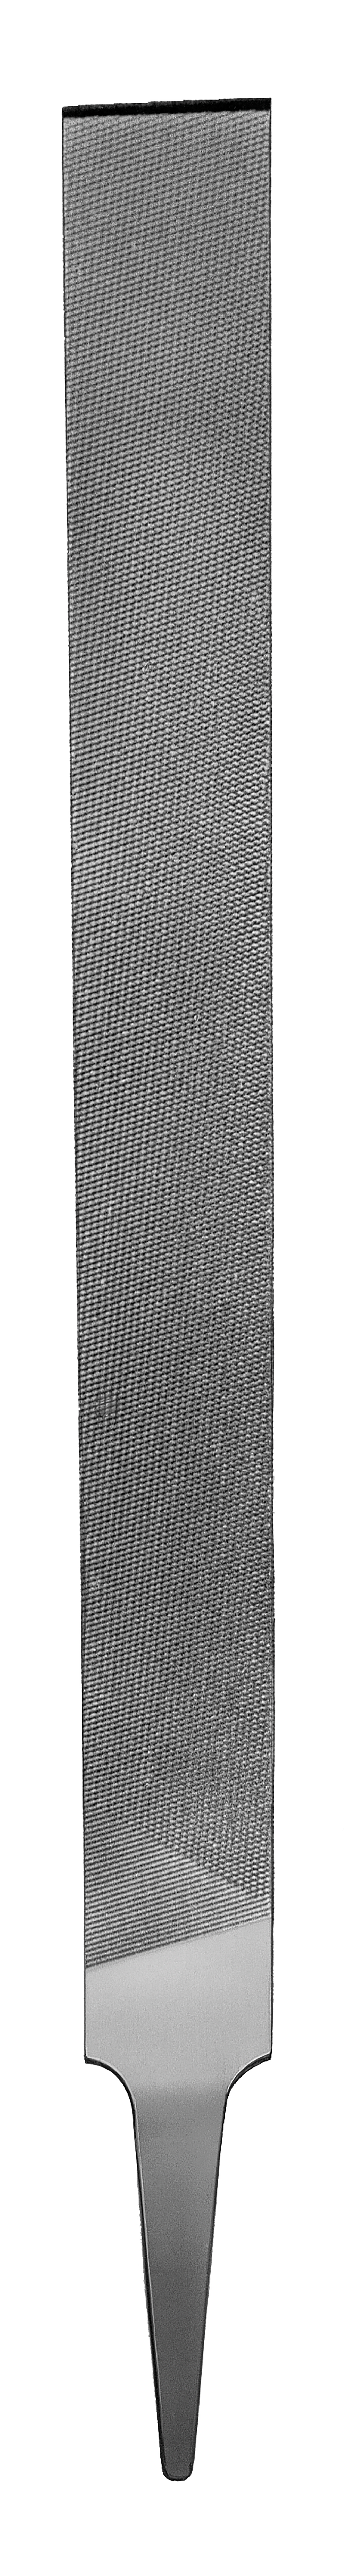 Foto of  Werkplaatsvijlen conform DIN 7261, vorm F, keep 1, 200 mm 